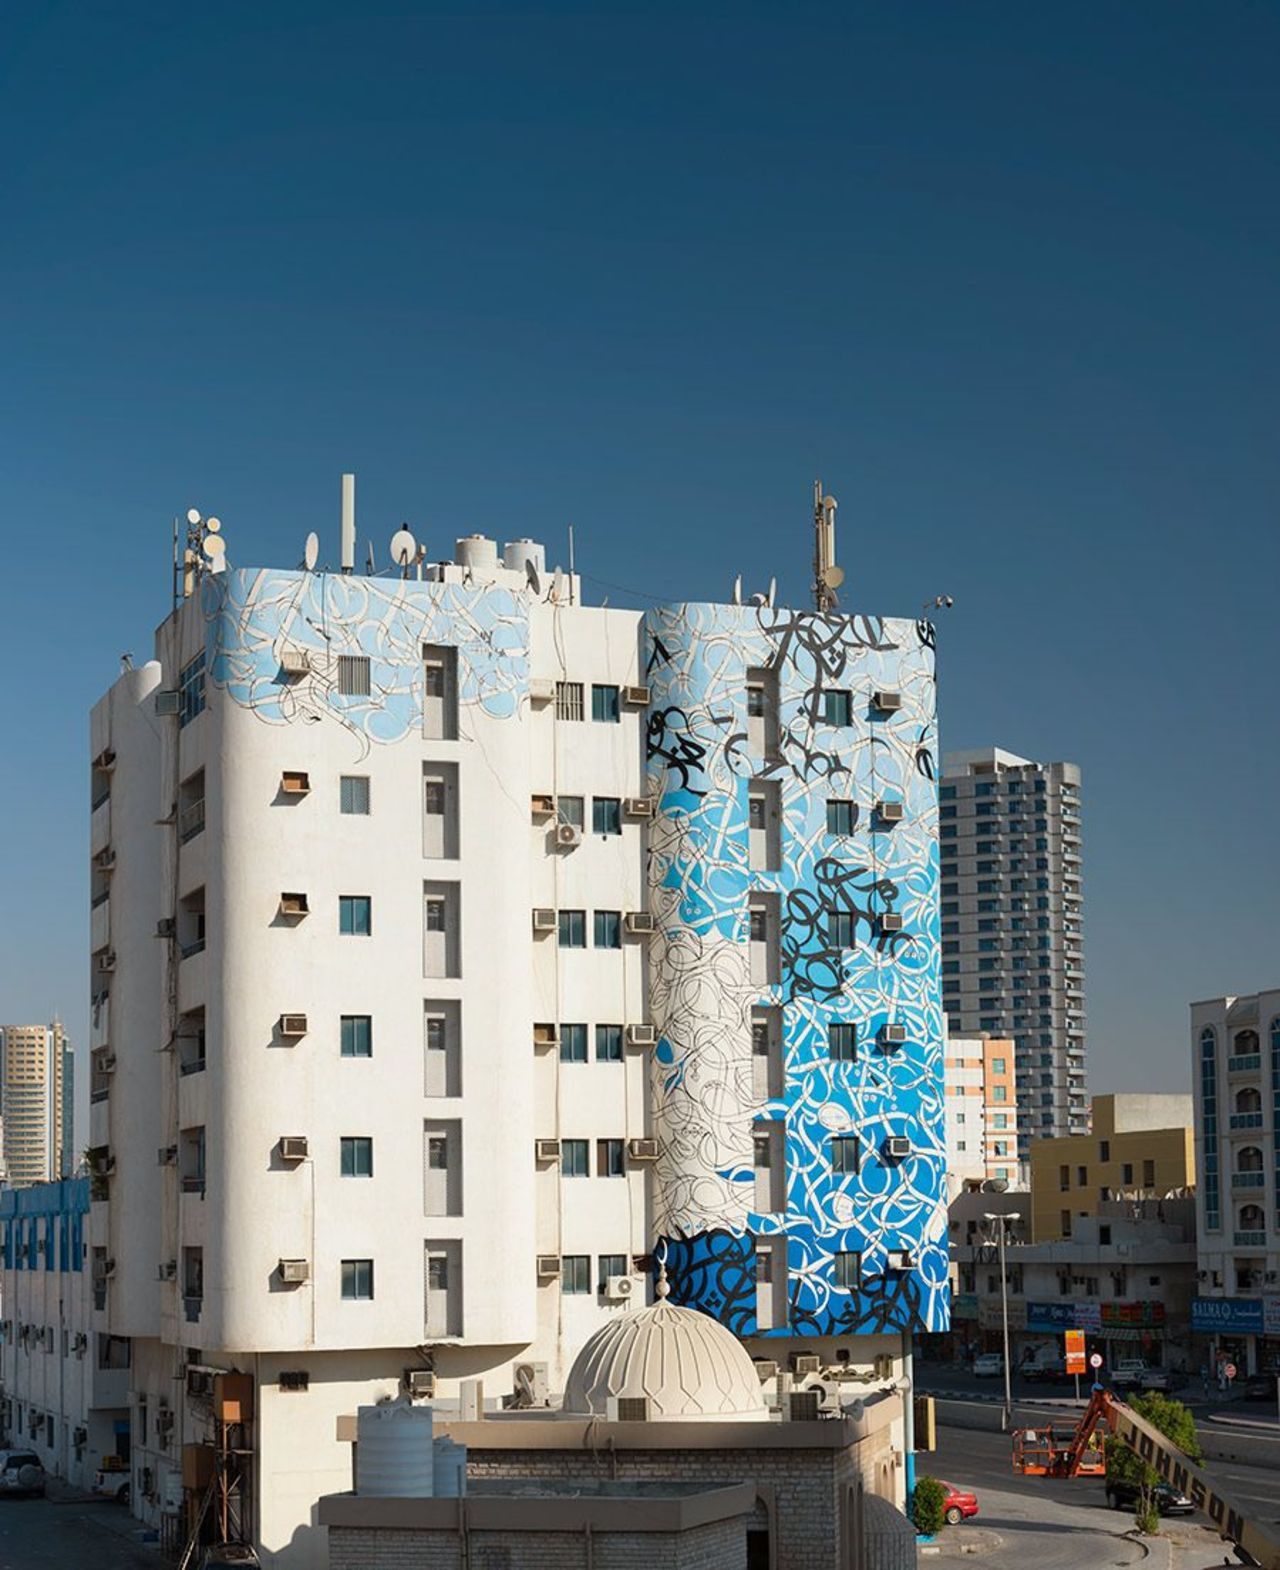 Work In Progress by eL Seed in Ajman, UAE#streetart #mural #graffiti #art https://t.co/5l9Uqn4MLq